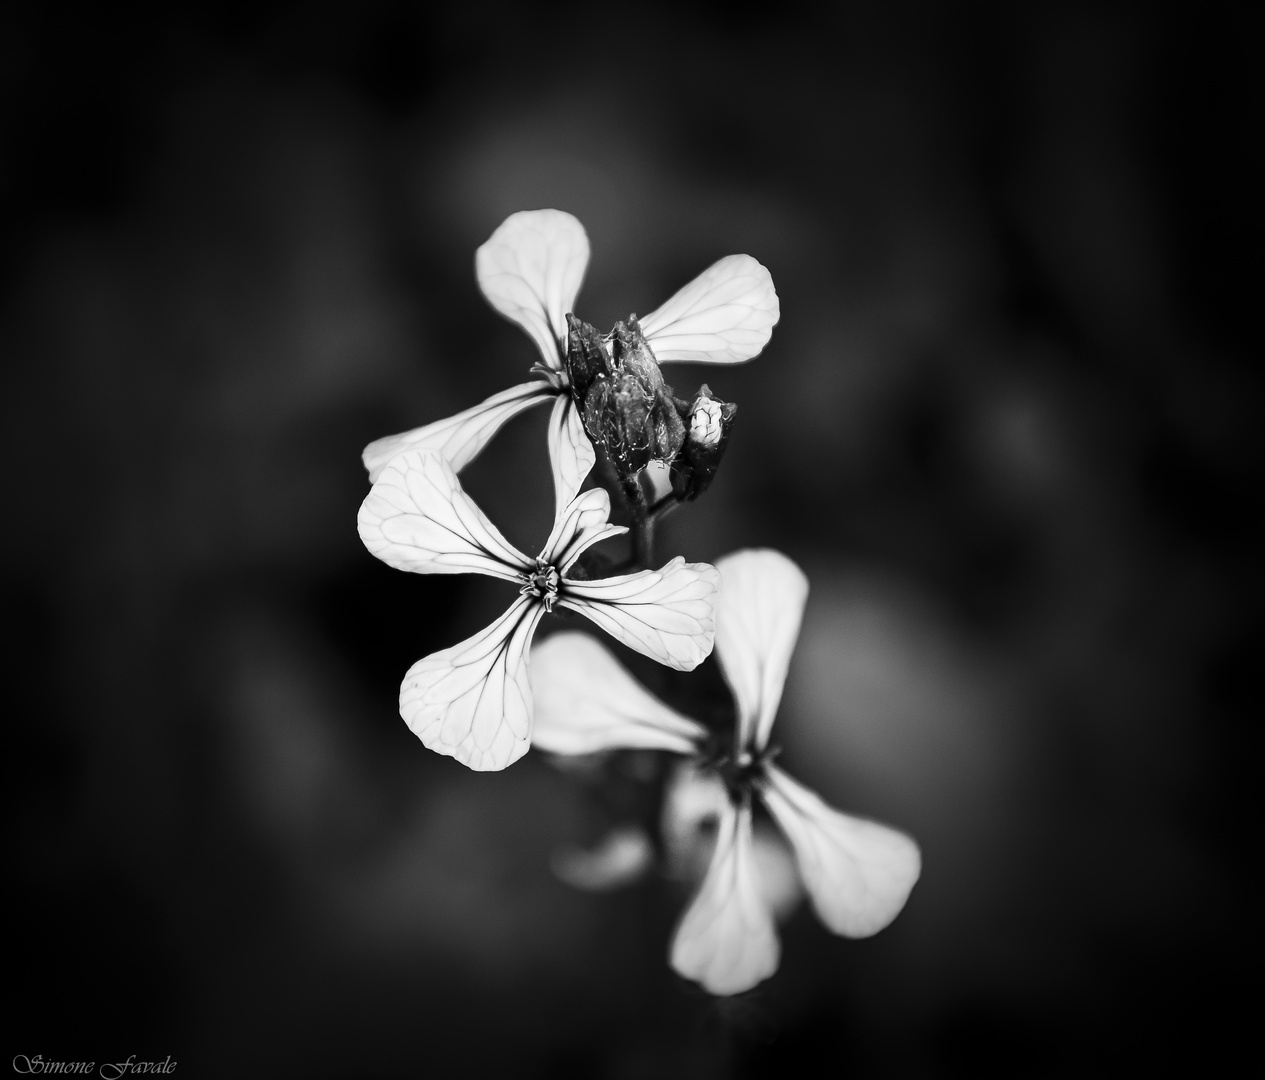 The Dark Soul of a Flower 2